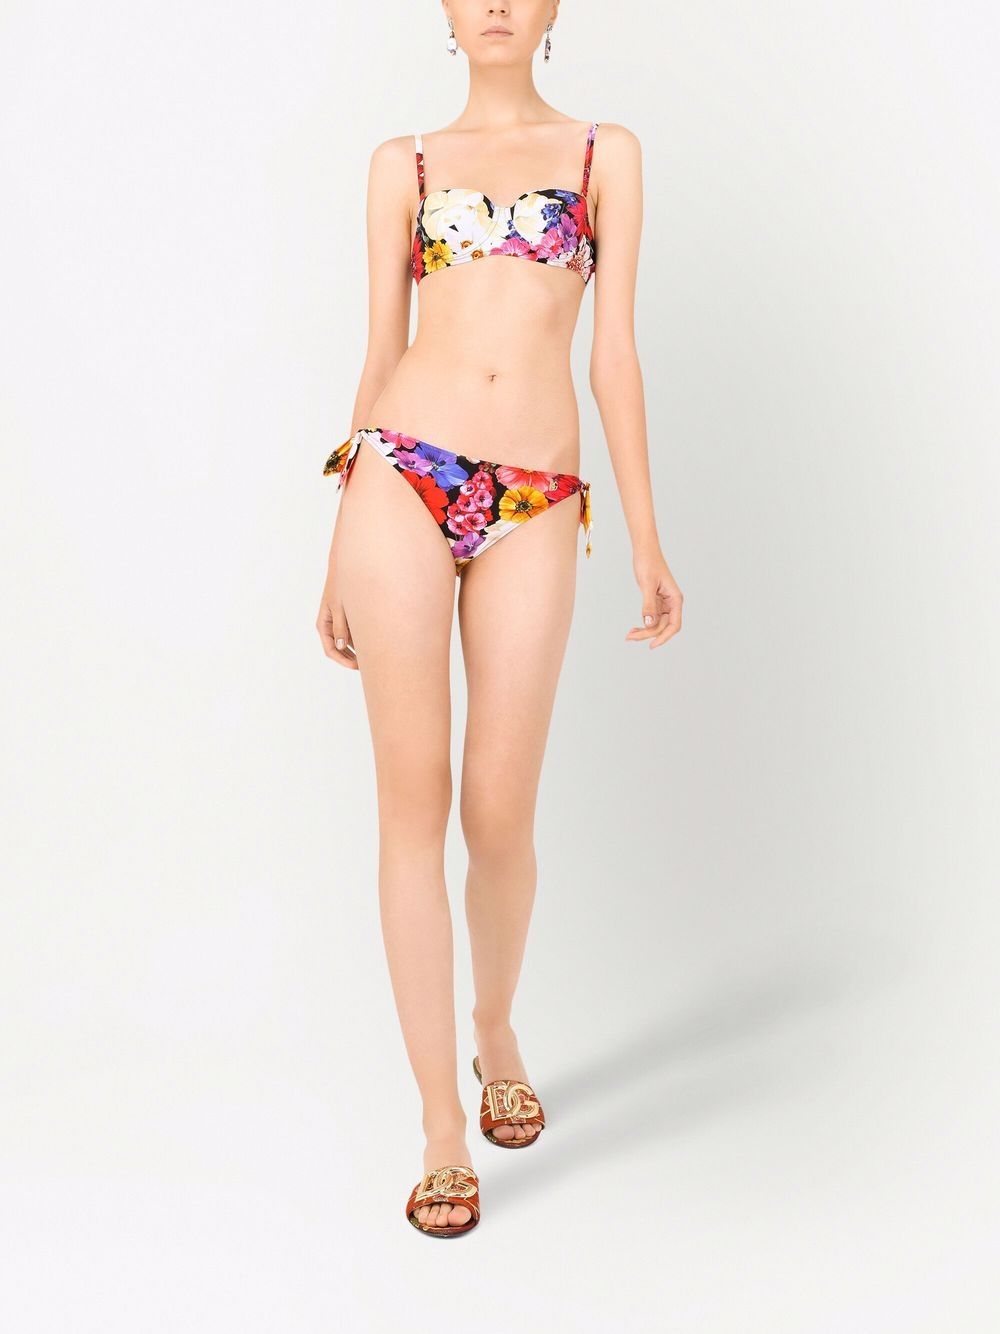 All-over floral print bikini